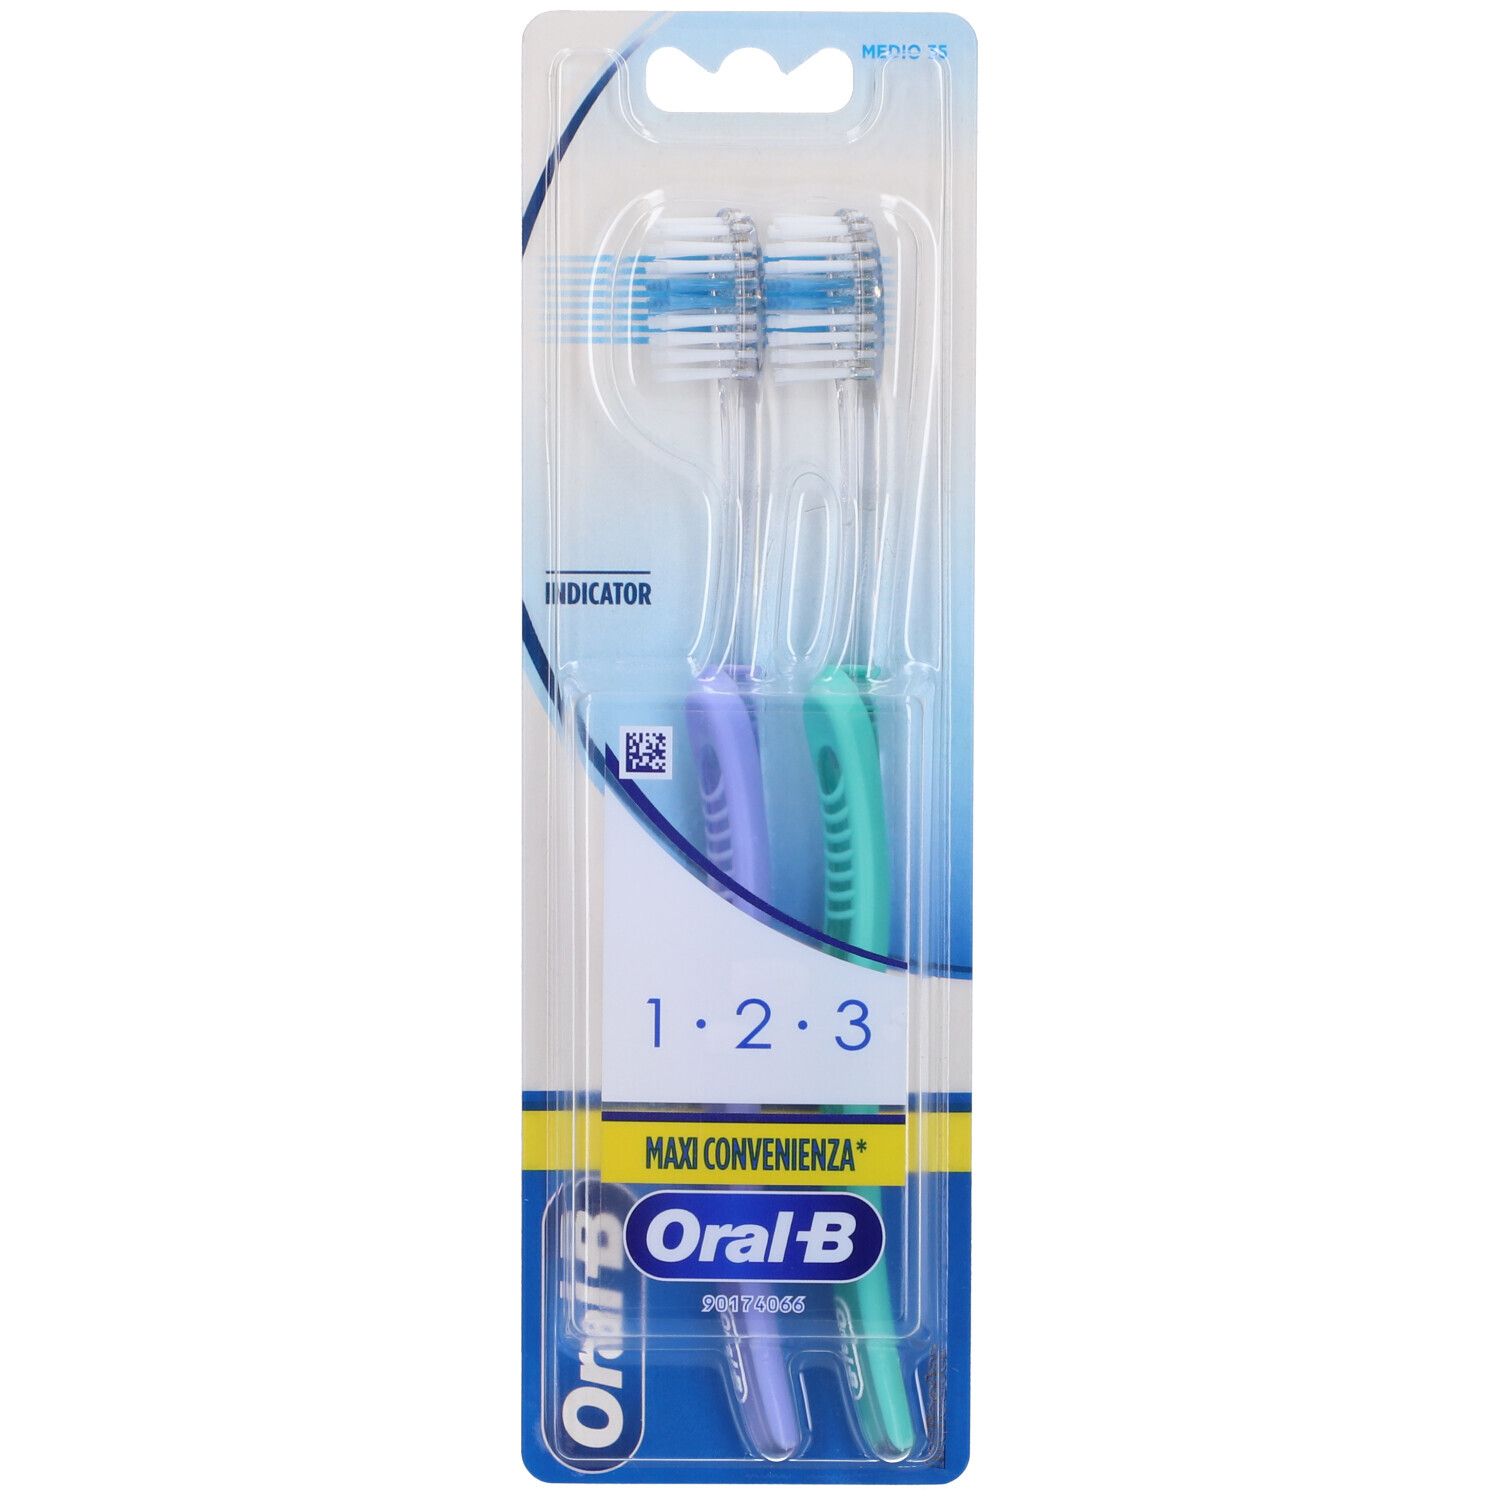 Oral-B 1-2-3 Indicator Medio